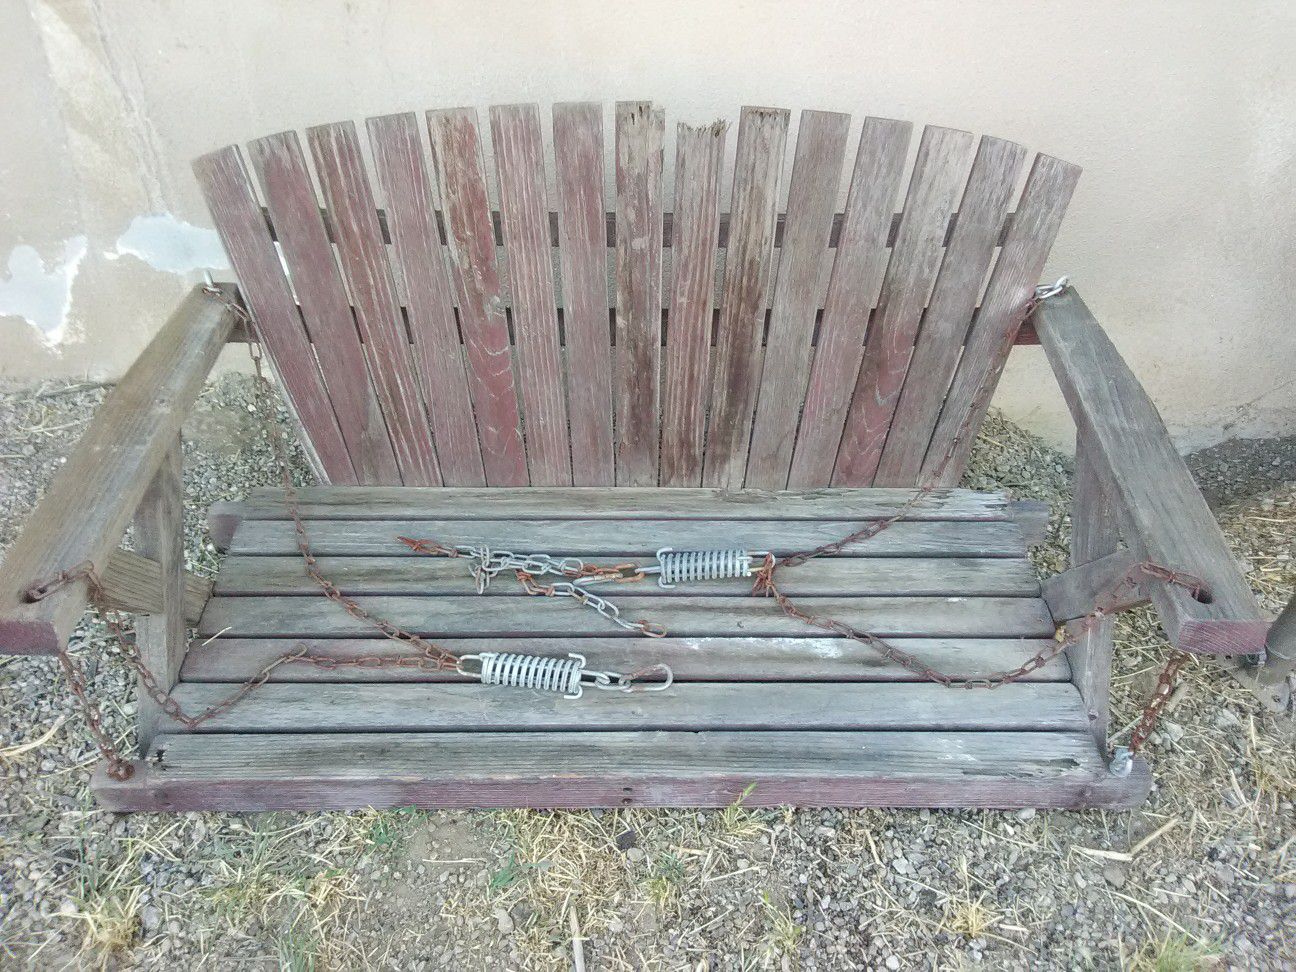 Porch swing